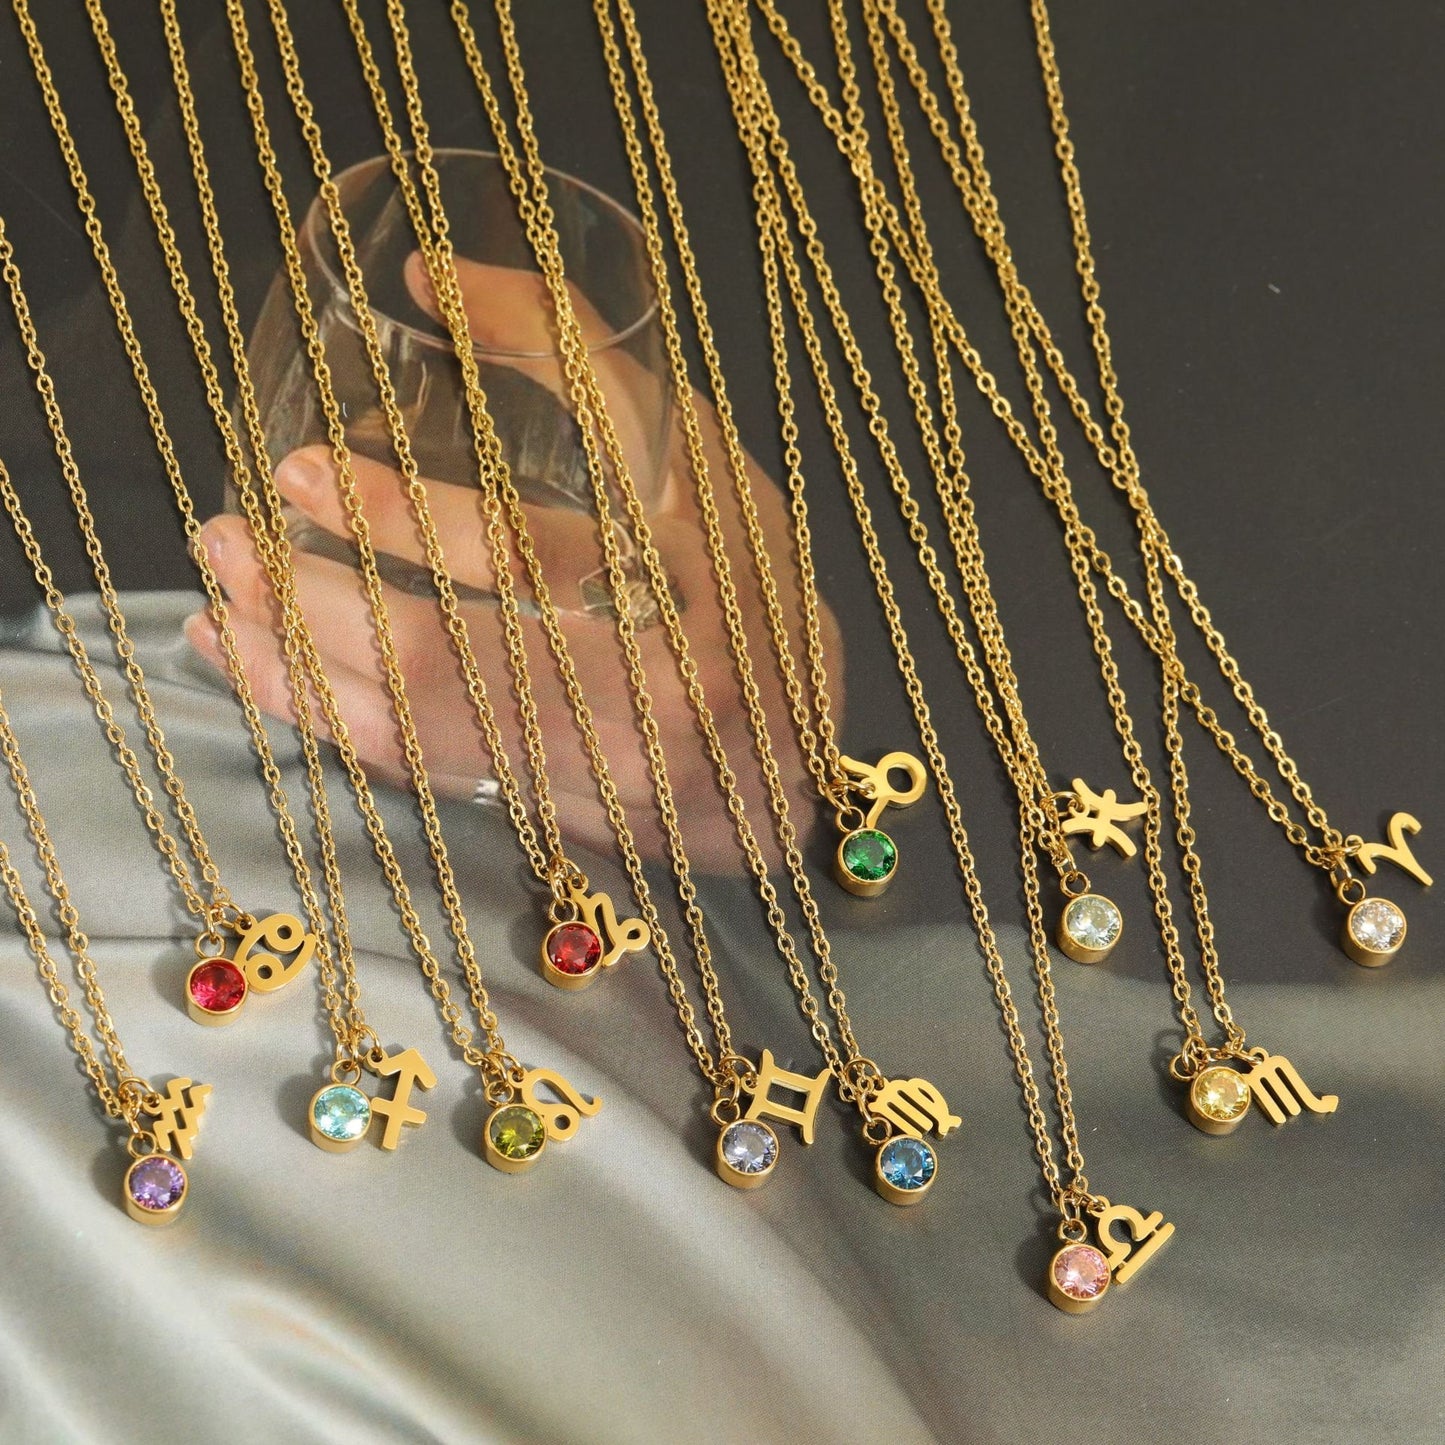 Twelve horoscope birthstone necklaces in gold.